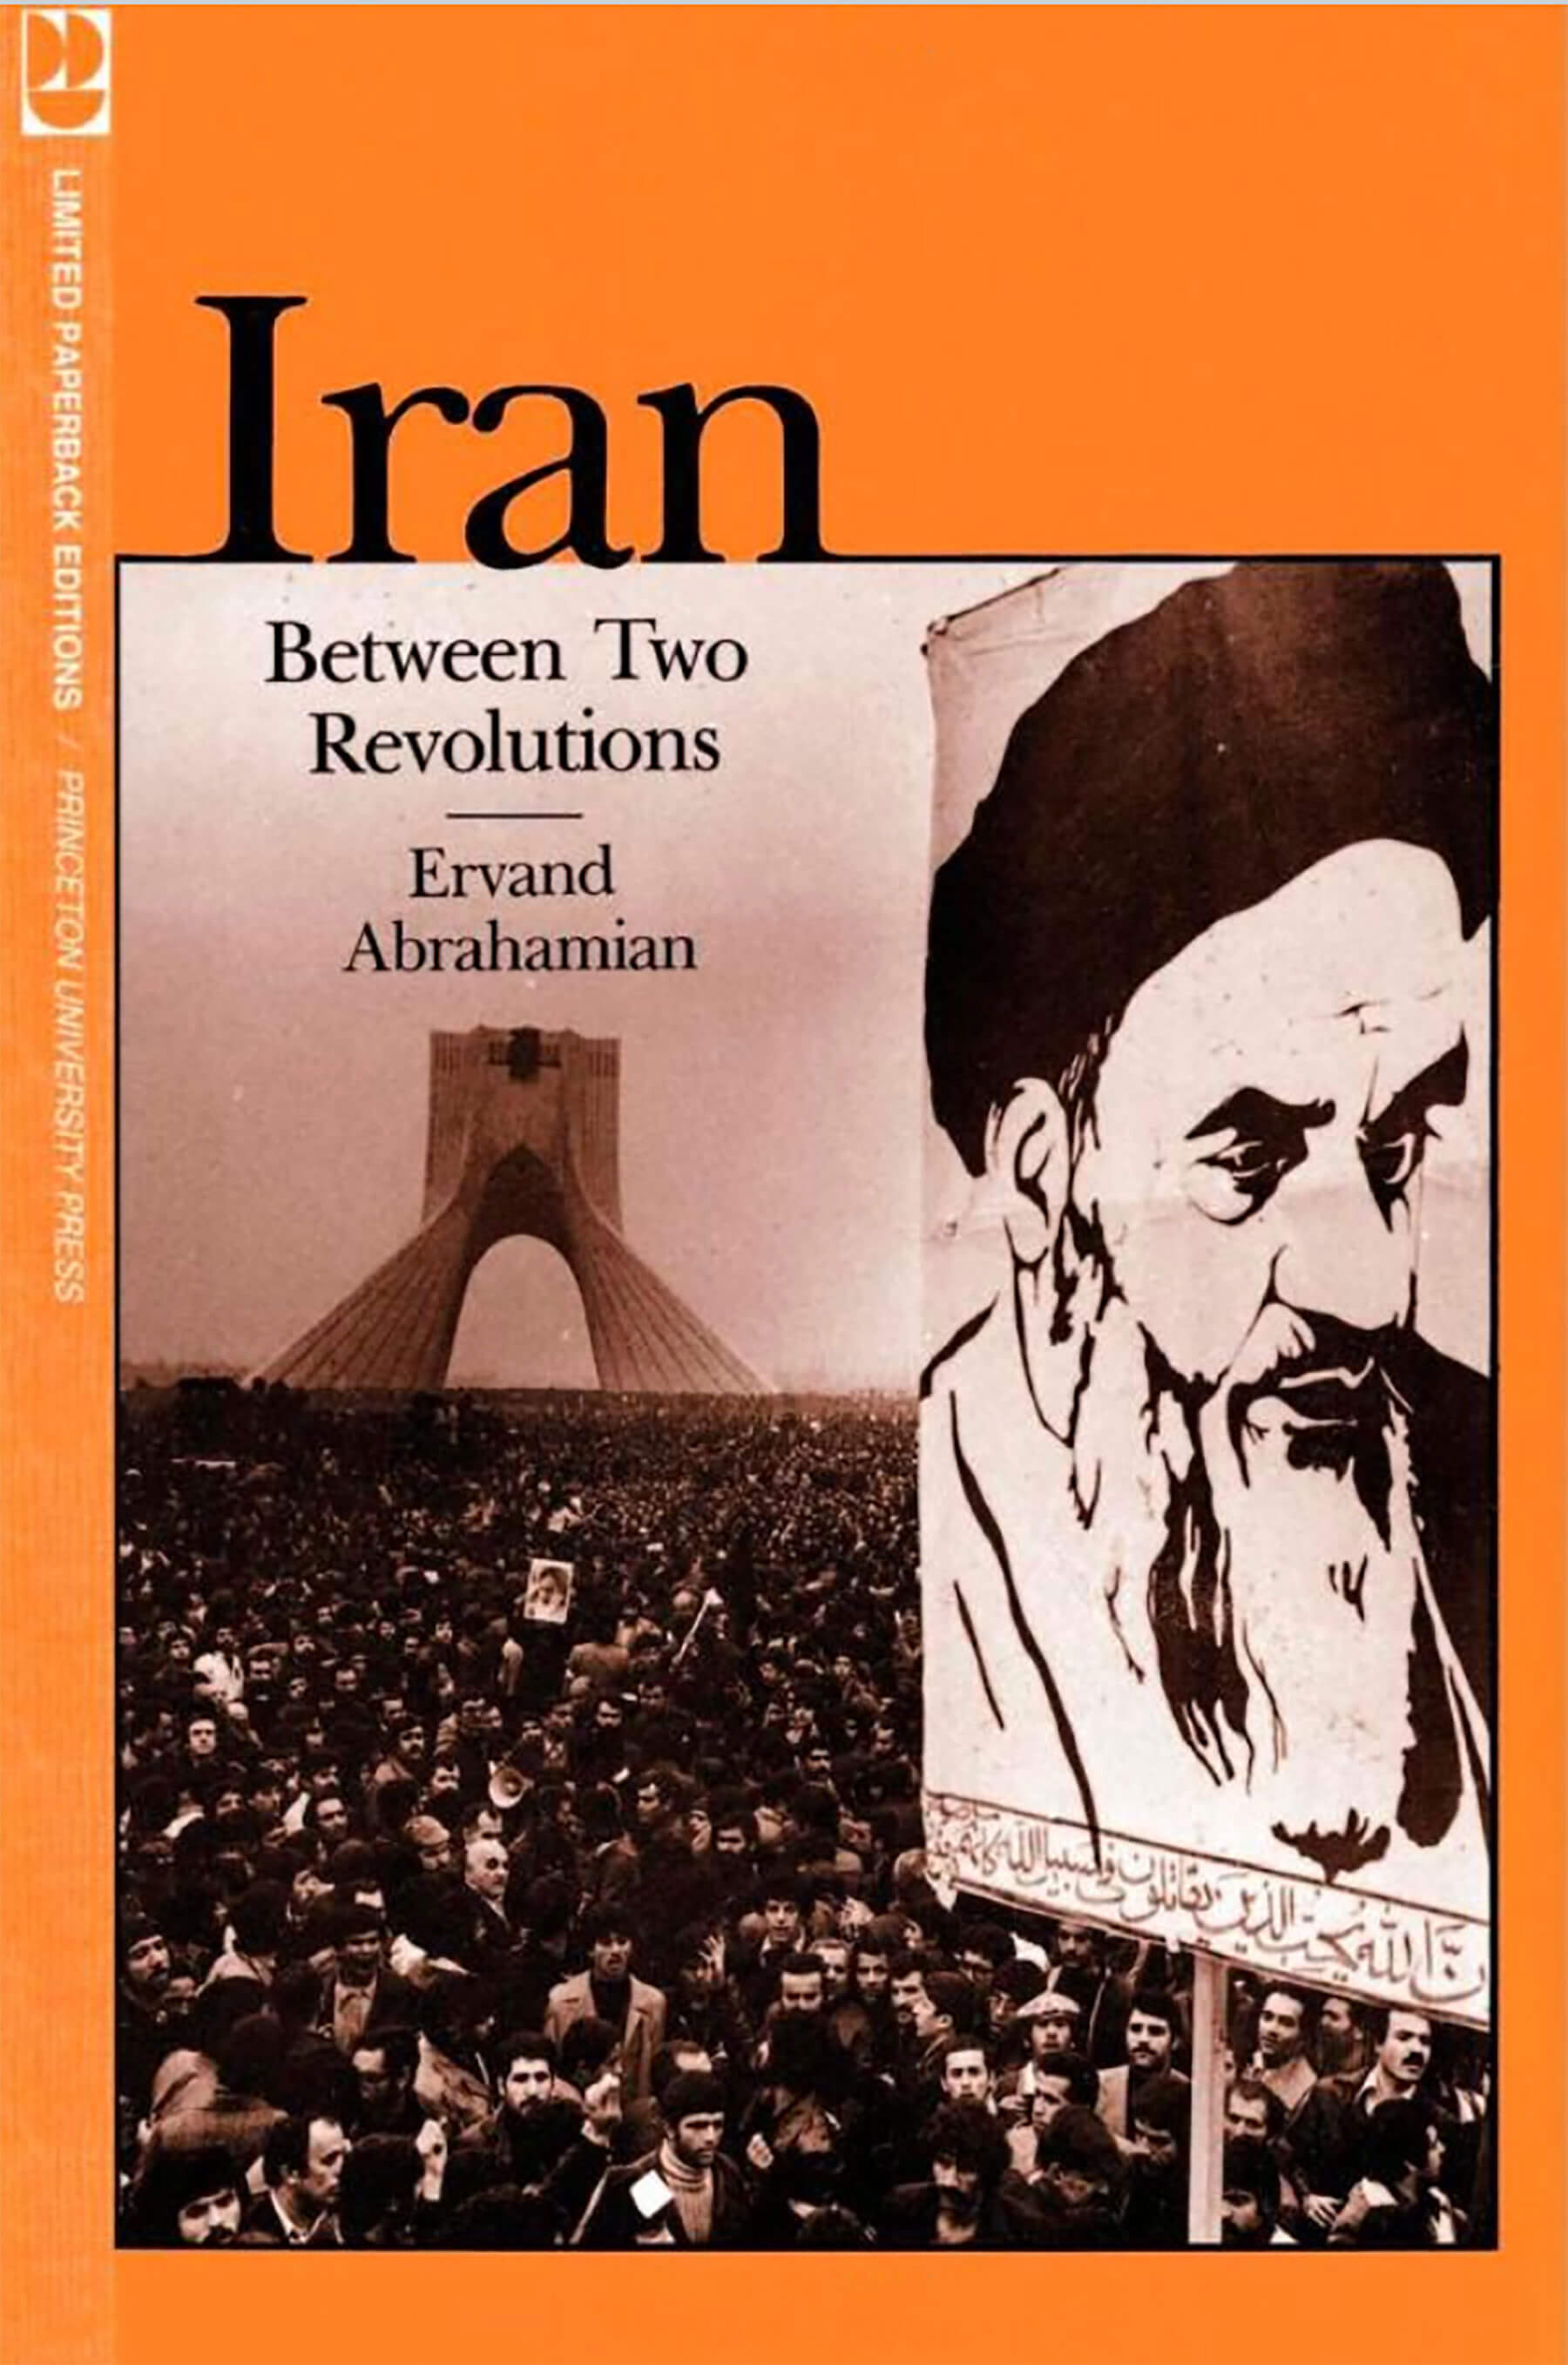 Books on Iran: Iran between two revolutions